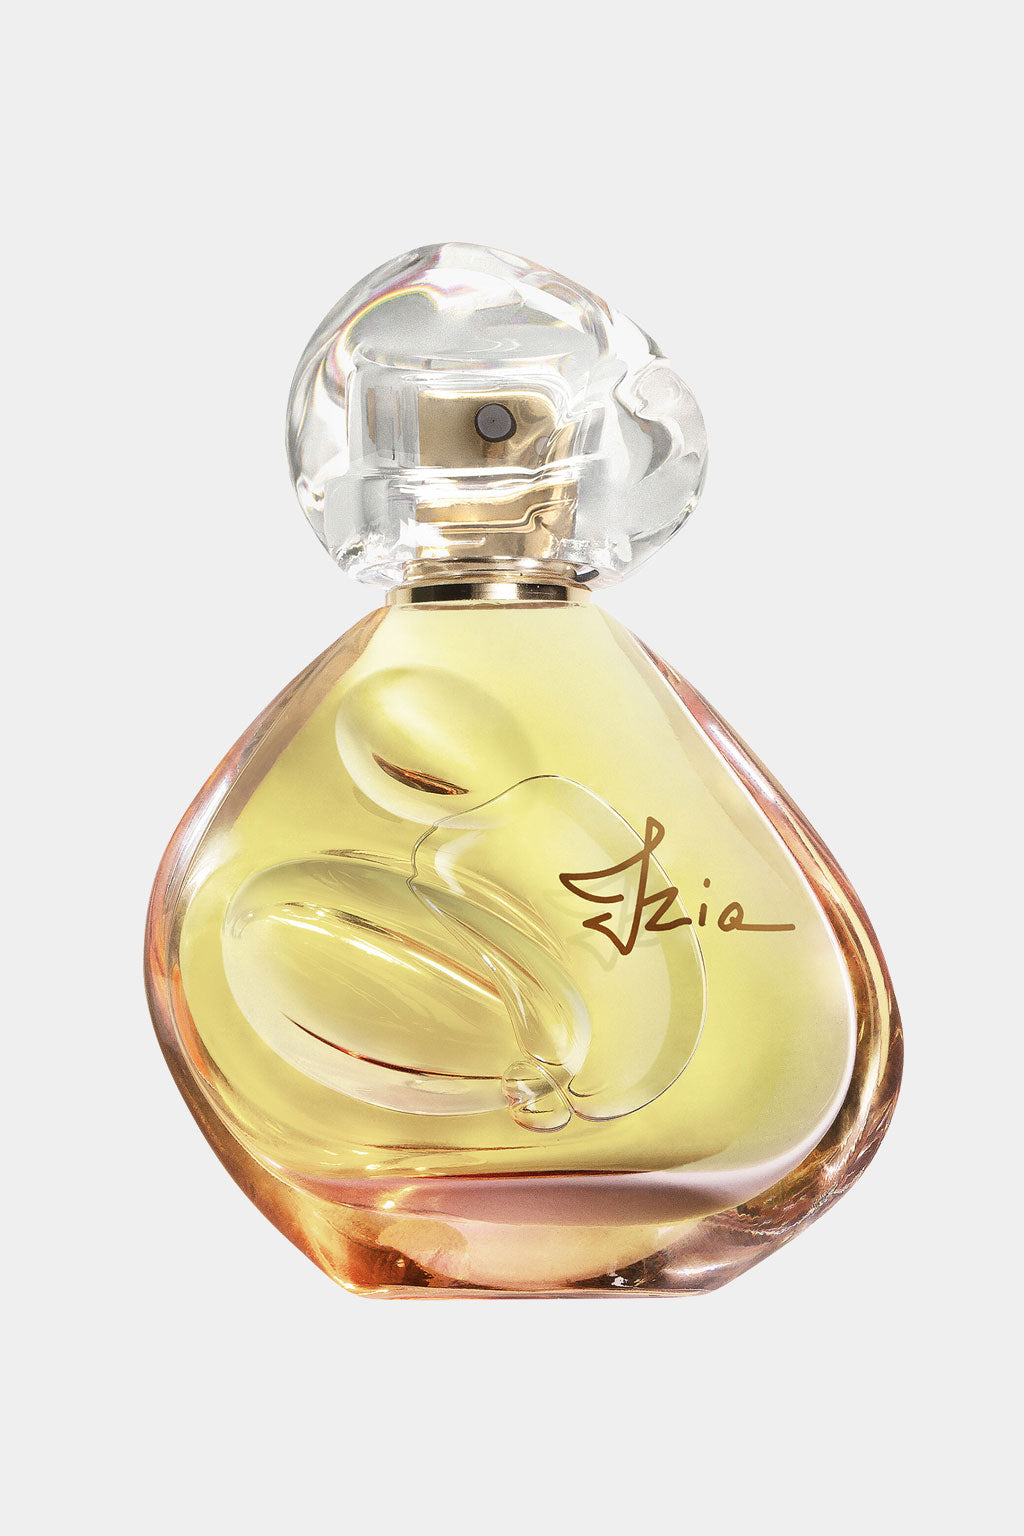 Sisley - Izia Eau de Parfum